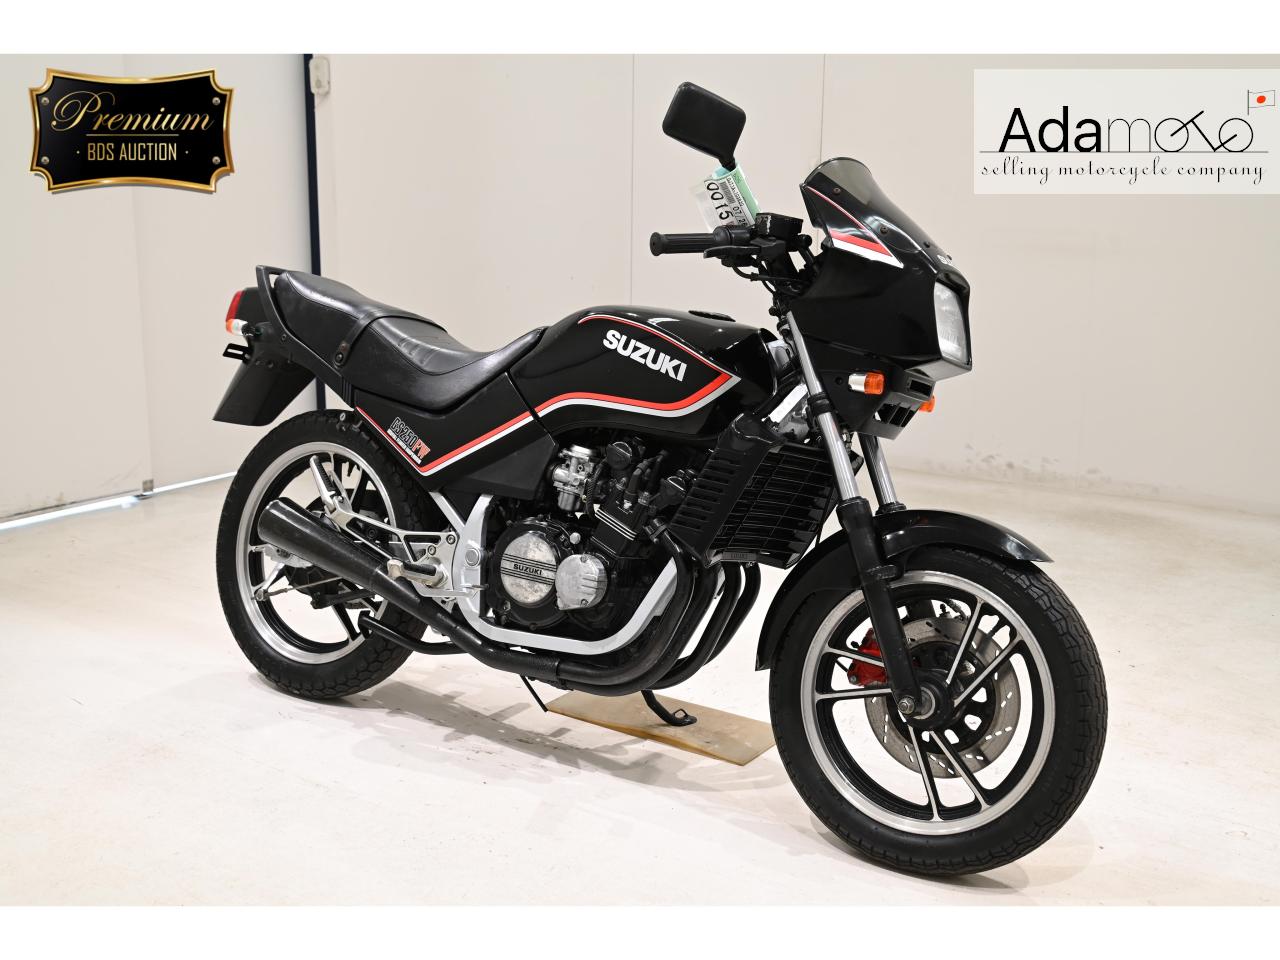 Suzuki GS250FW - Adamoto - Motorcycles from Japan